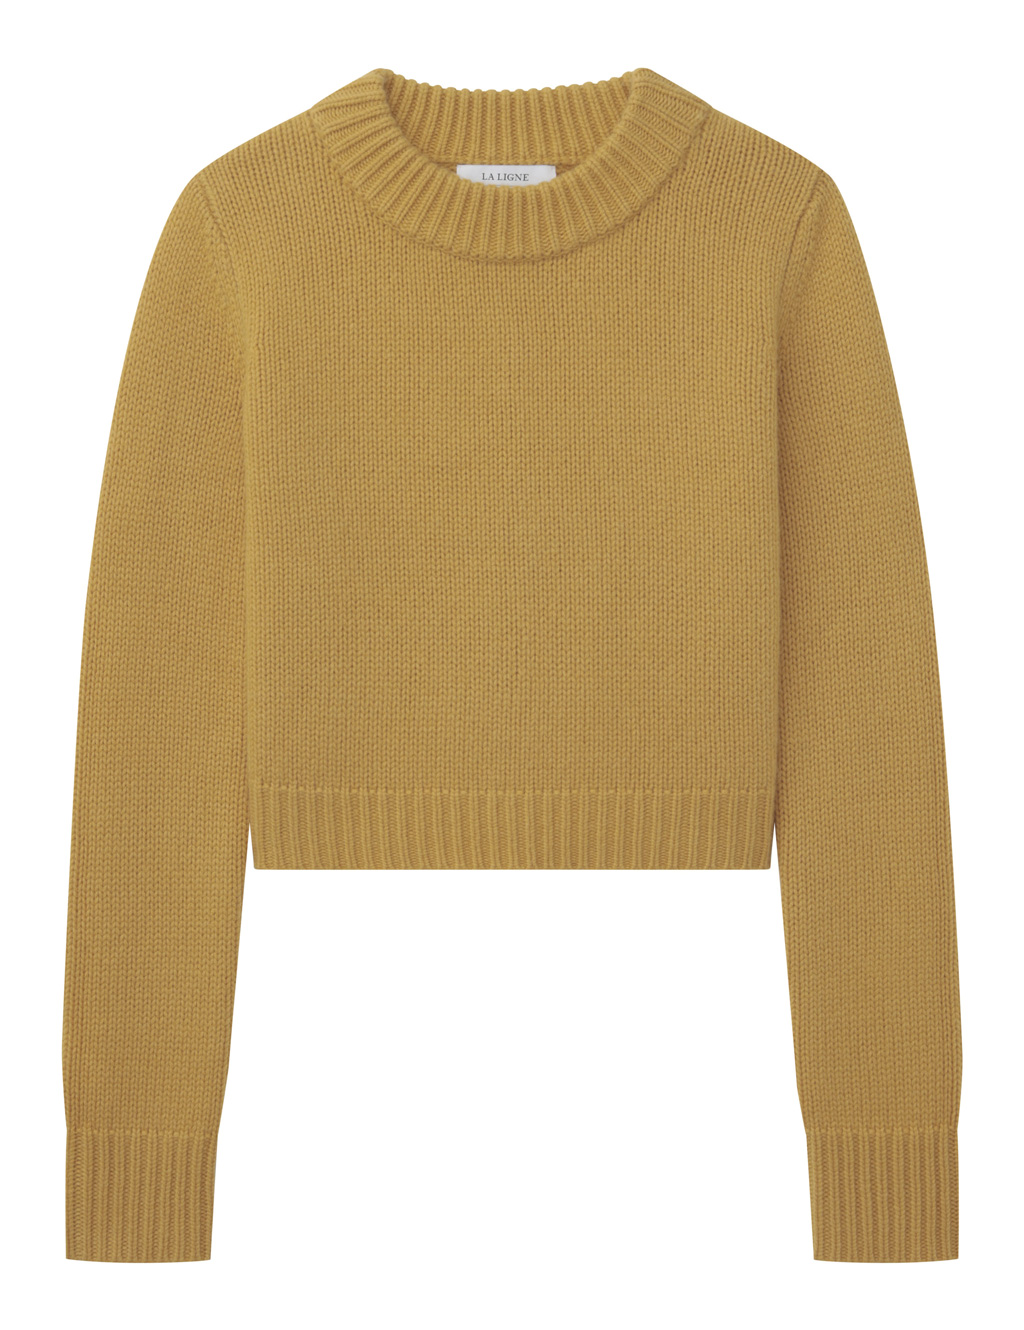 a sweater from La Ligne